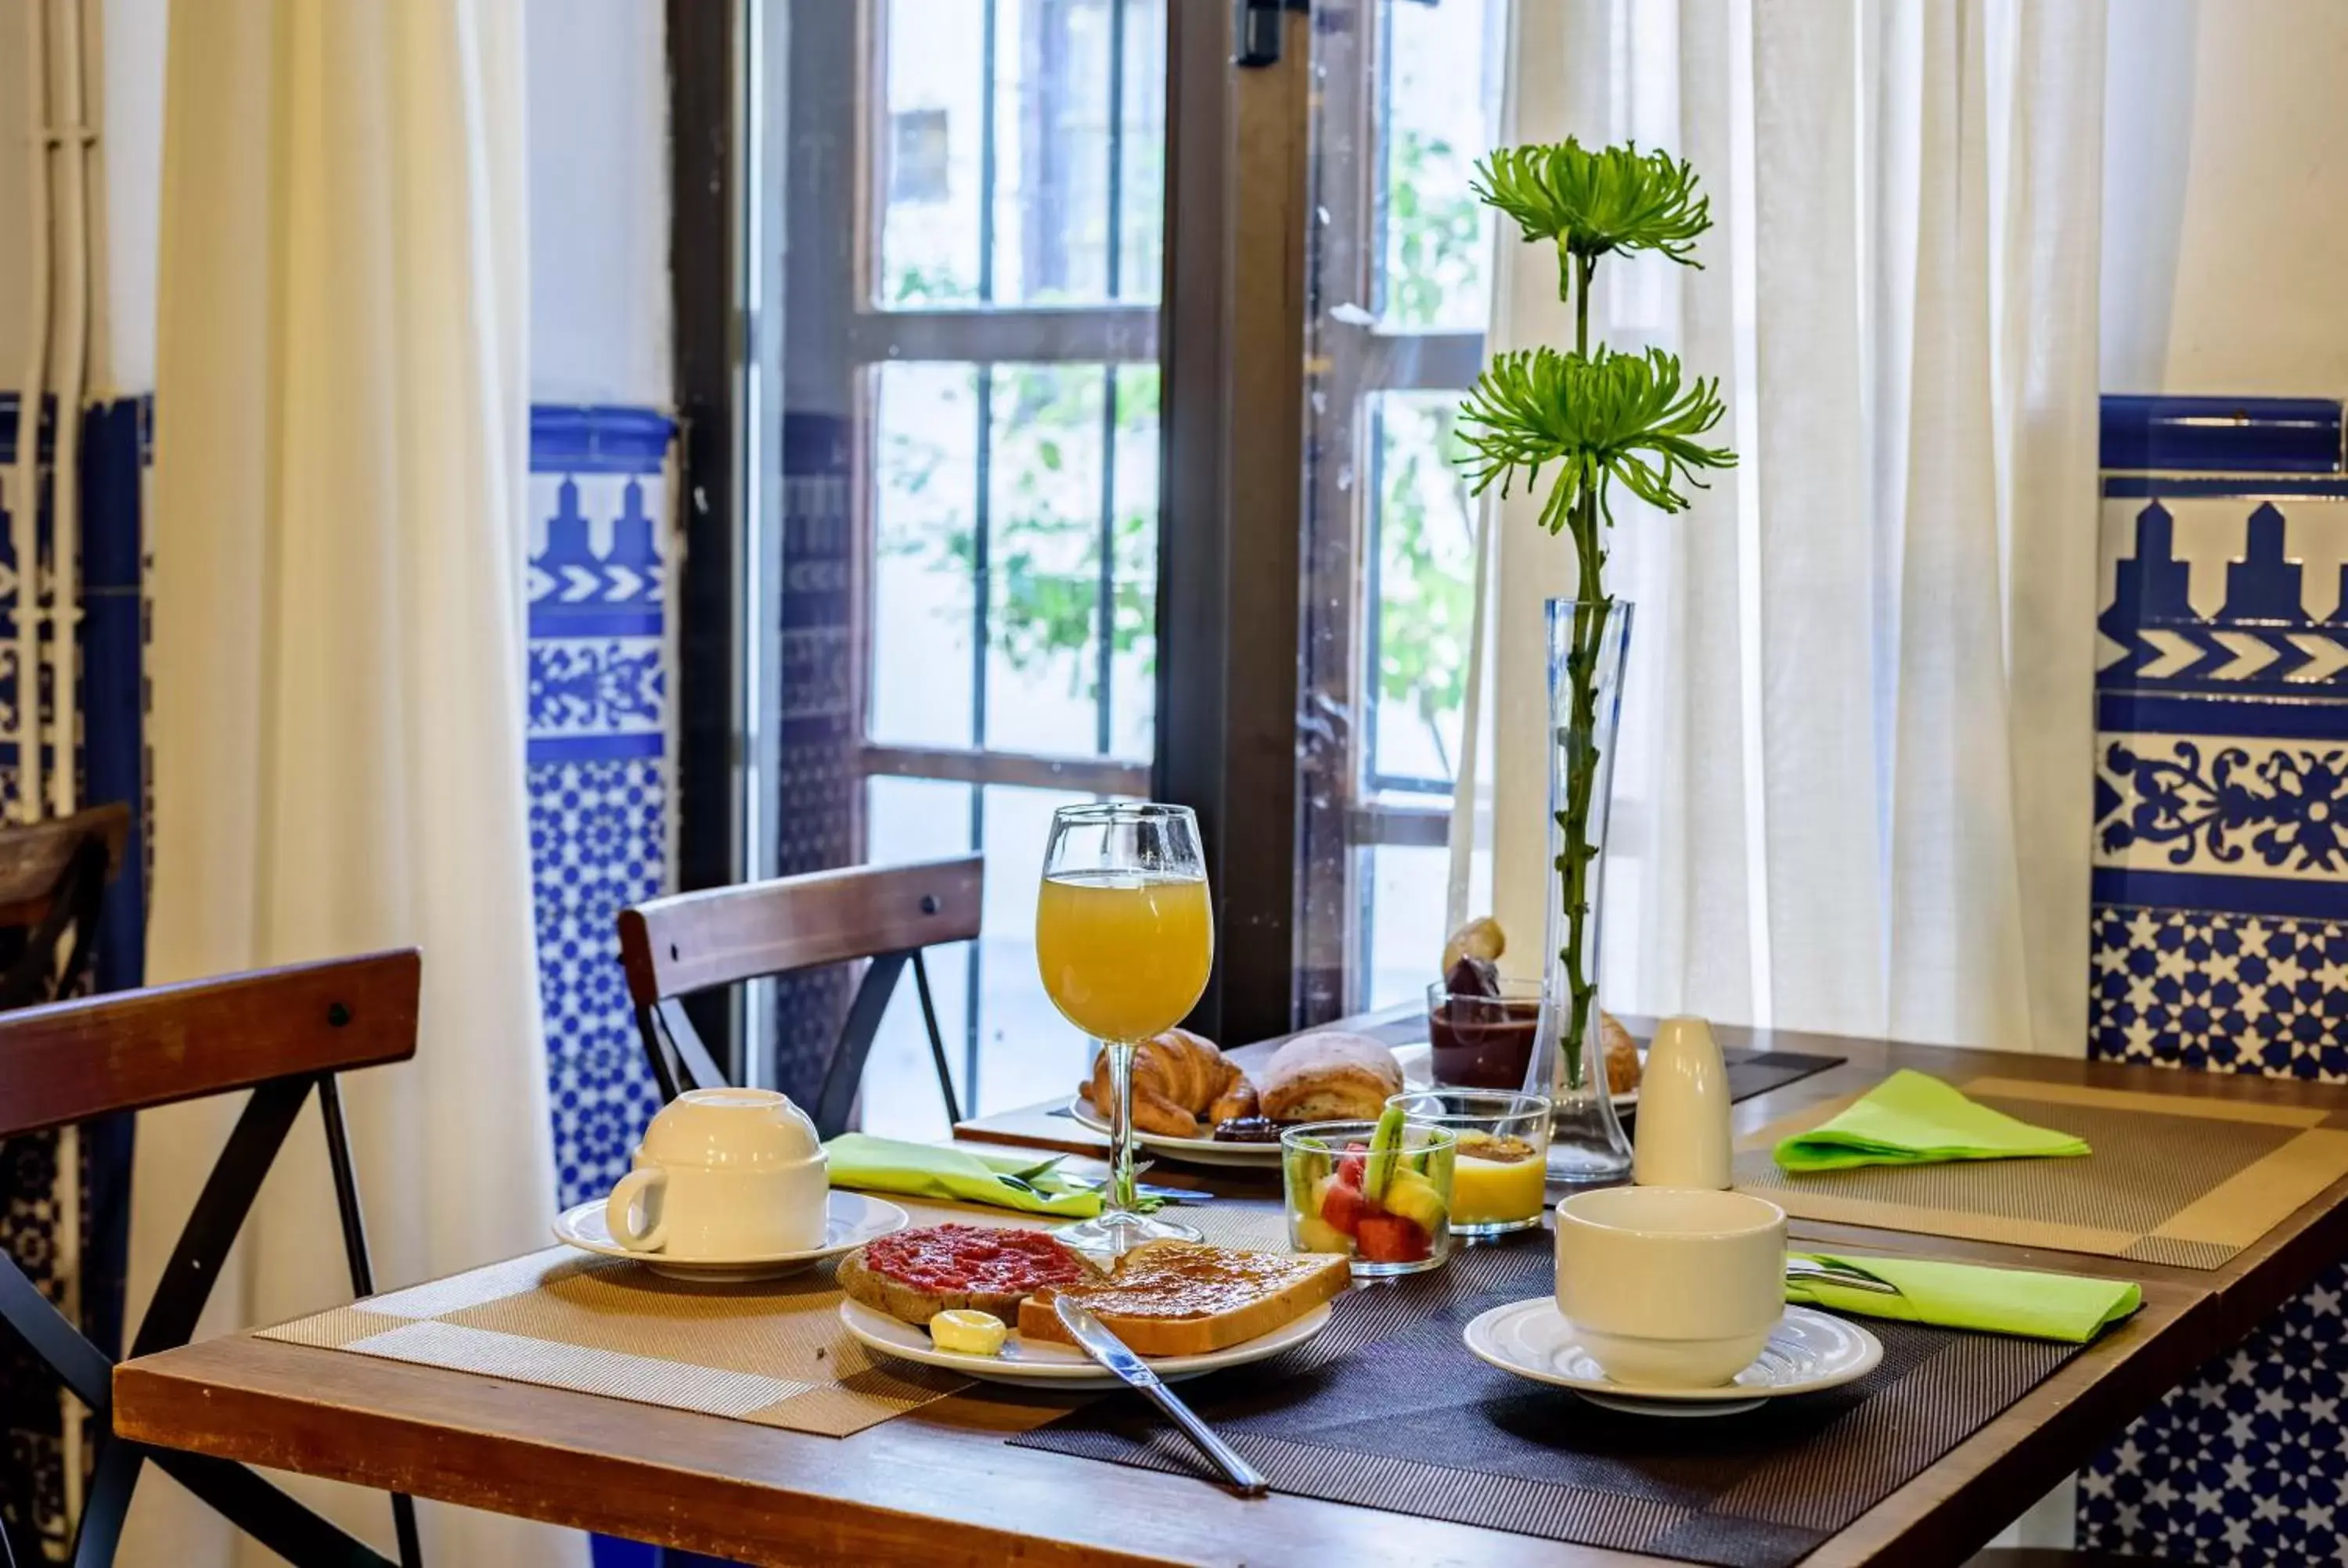 Buffet breakfast in Palacio de Santa Inés